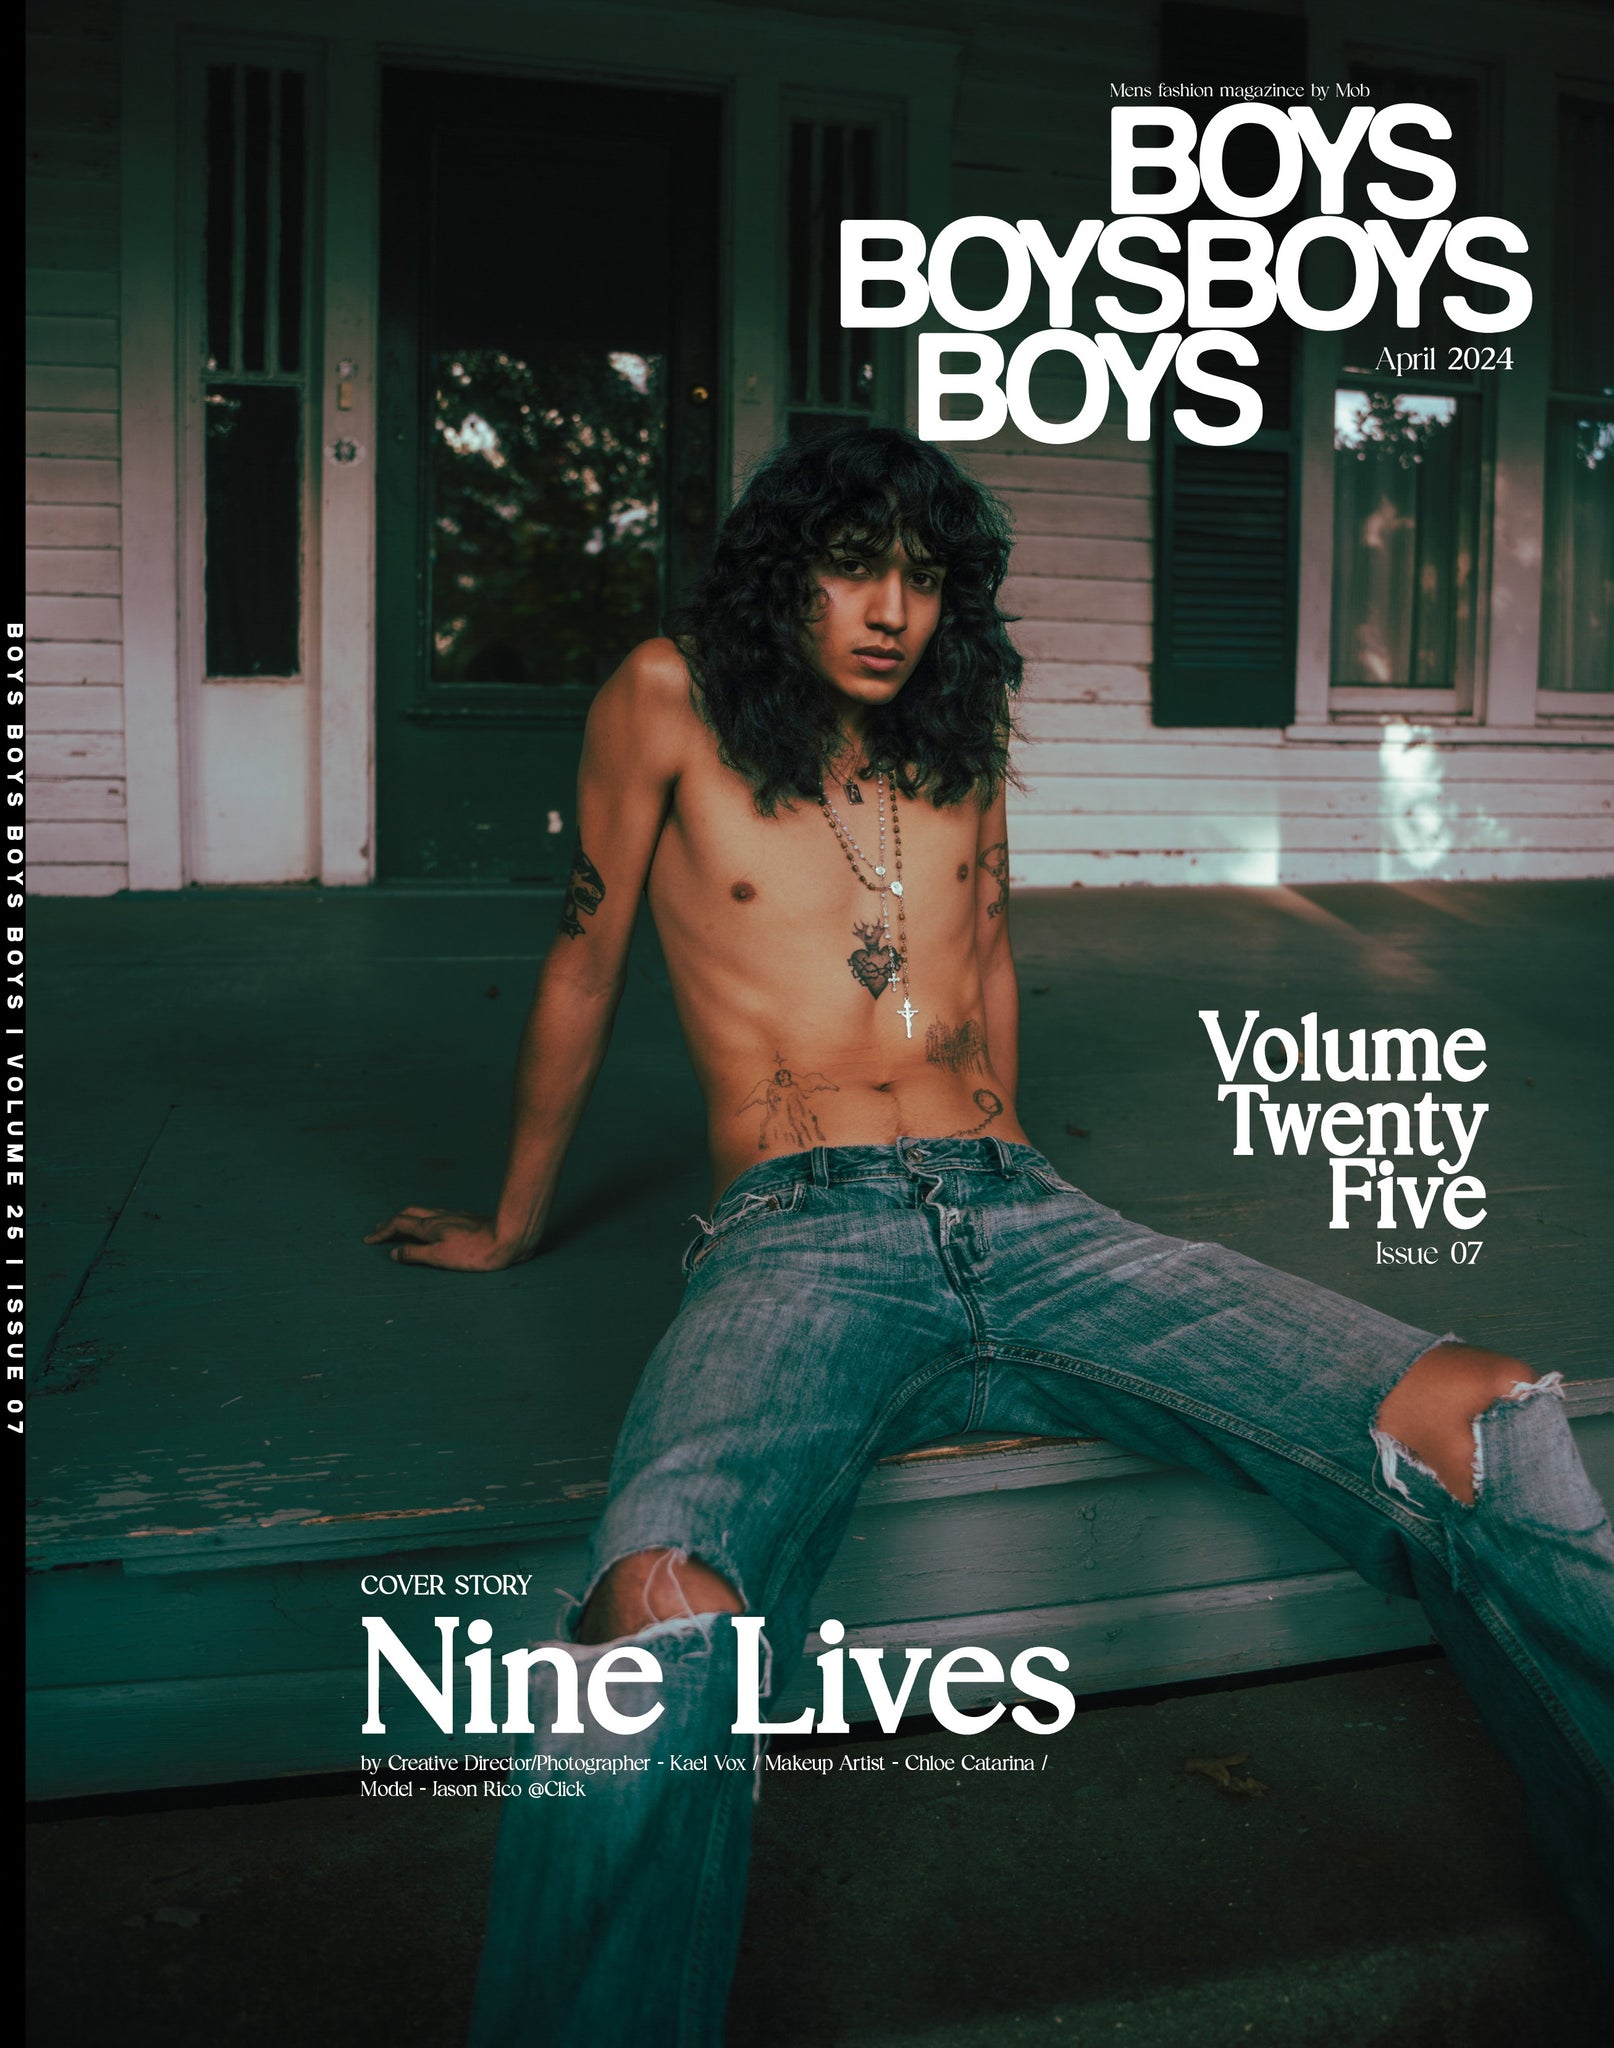 BOYS BOYS BOYS BOYS | VOLUME TWENTY FIVE | ISSUE #07